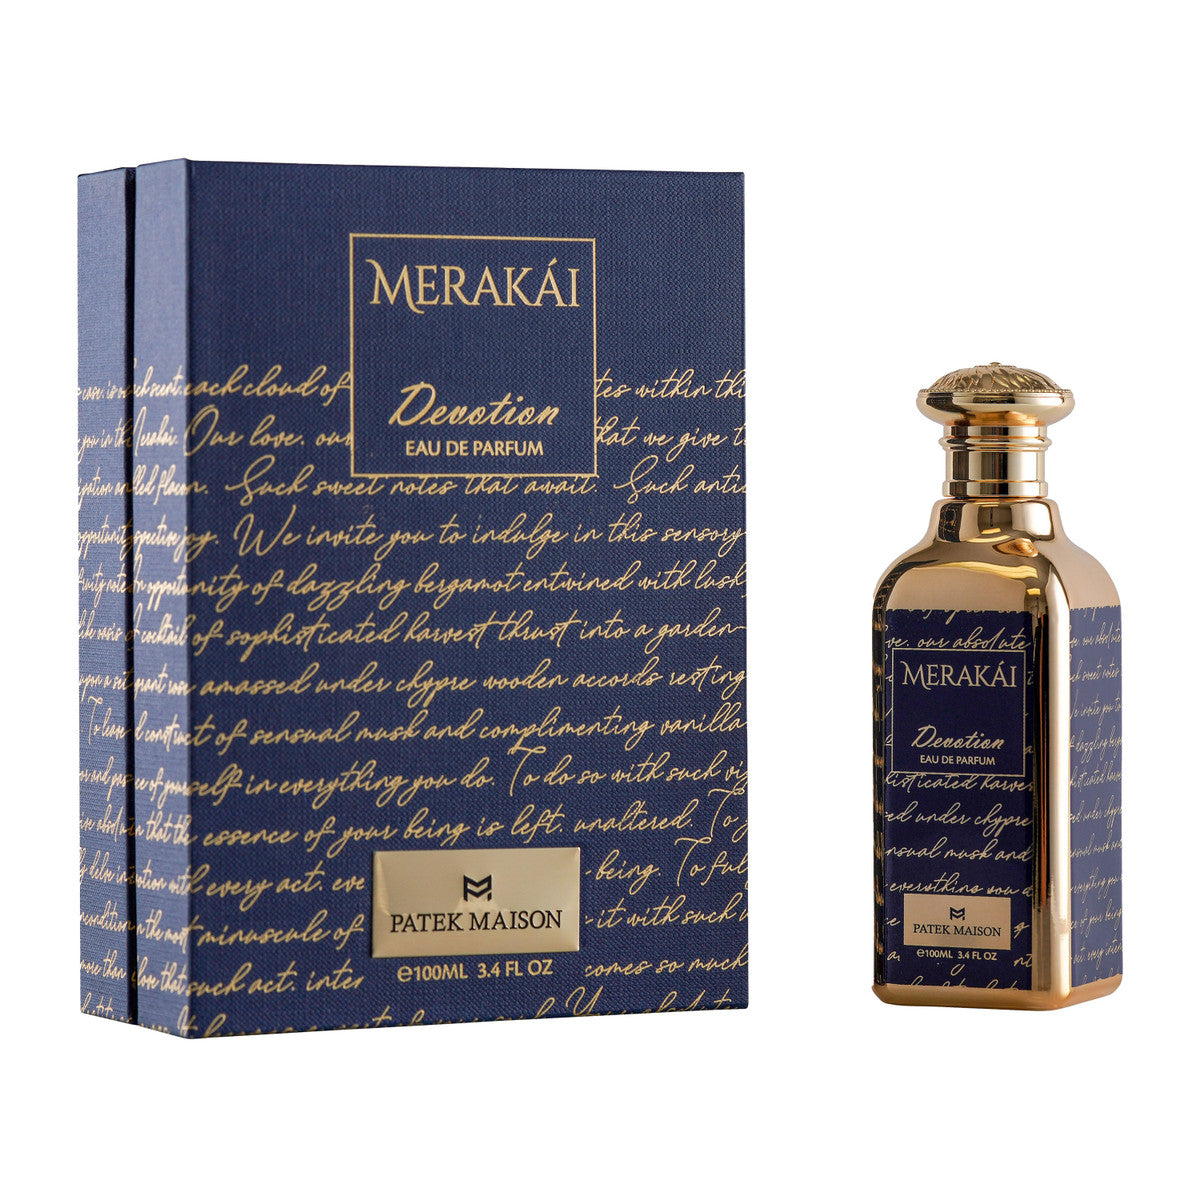 Patek Maison Merakai Devotion  Eau de Parfum 3.4 oz 100 ml